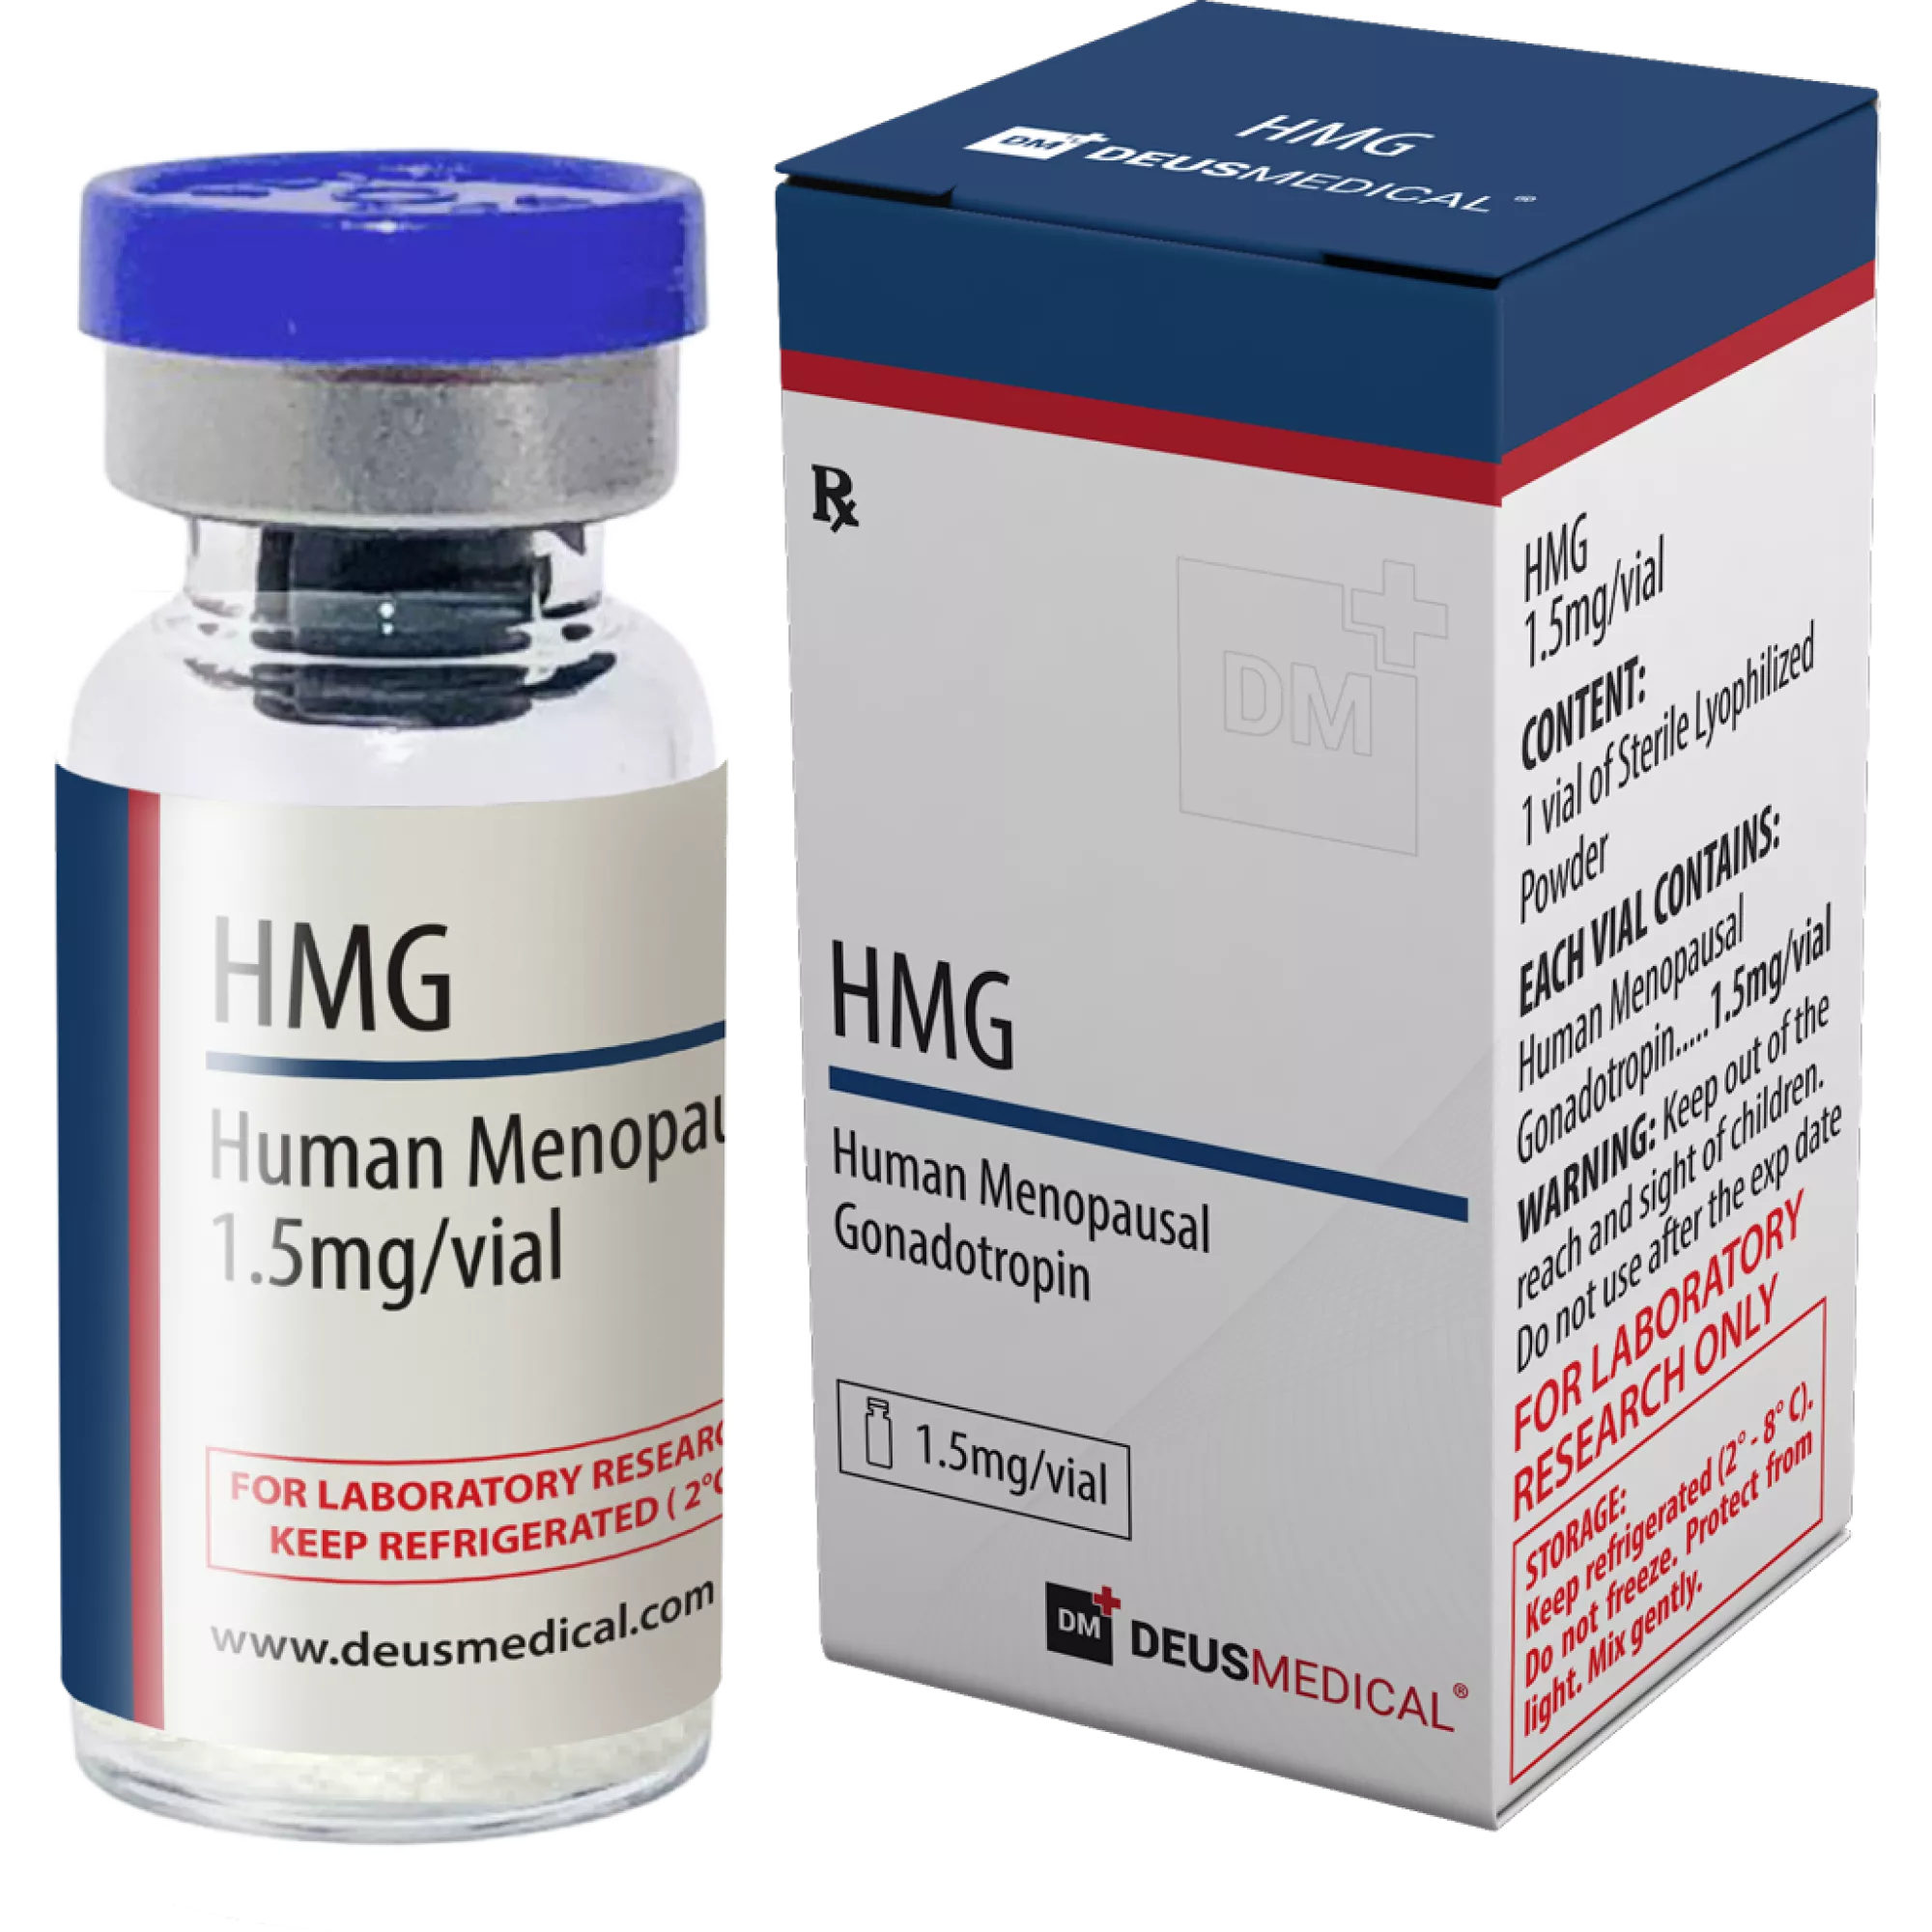 HMG (Human Menopausal Gonadotropin), Deus Medical, Köp steroider online - www.deuspower.shop